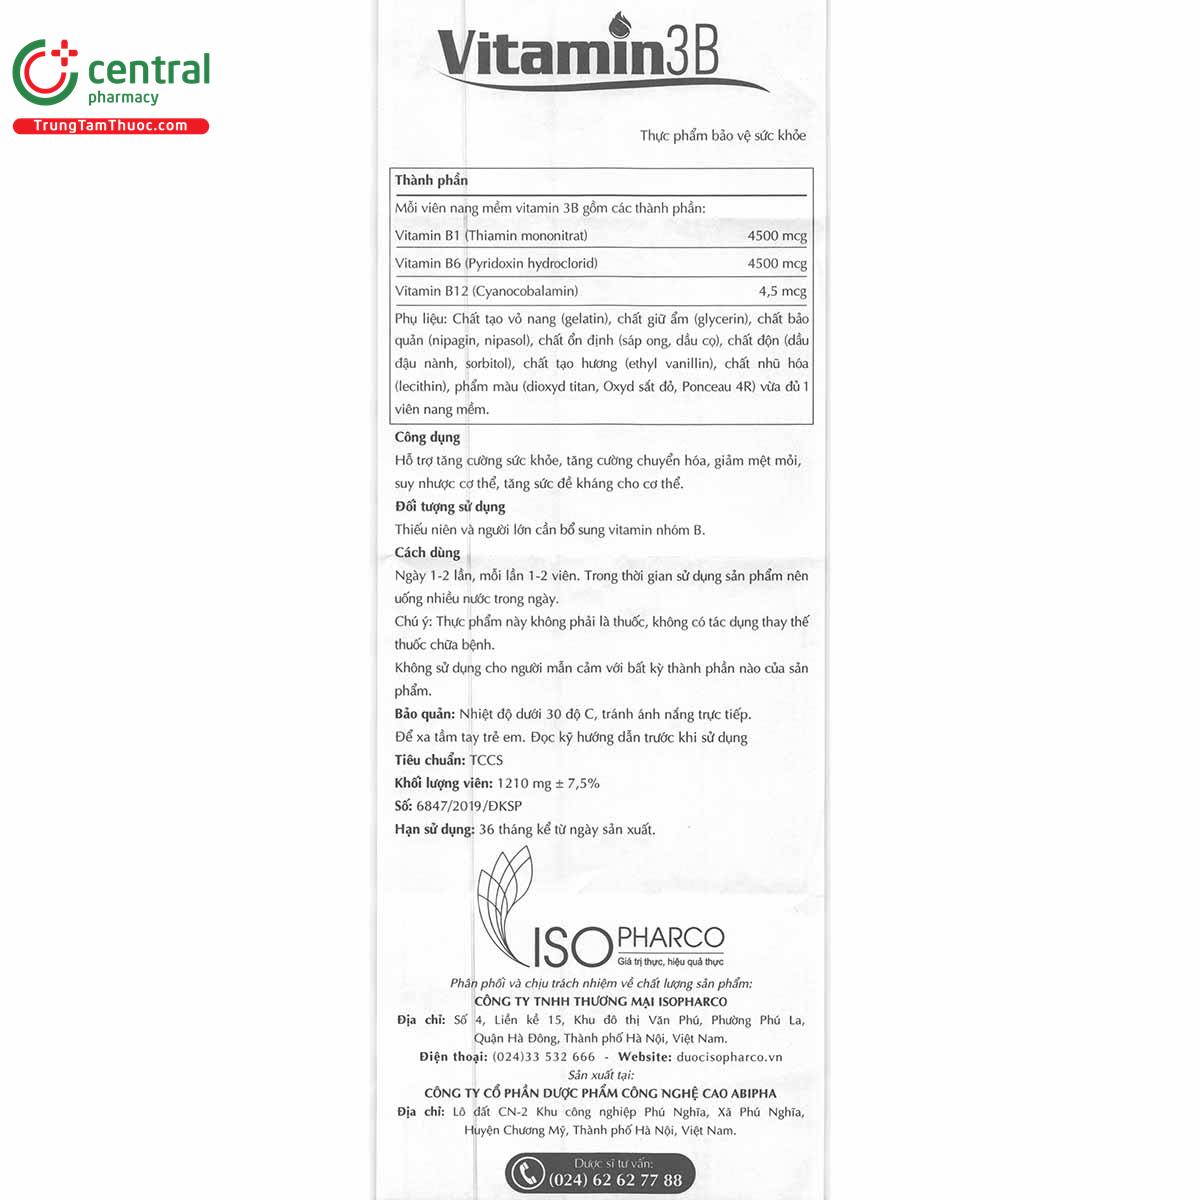 isopharco vitamin 3b 9 S7011